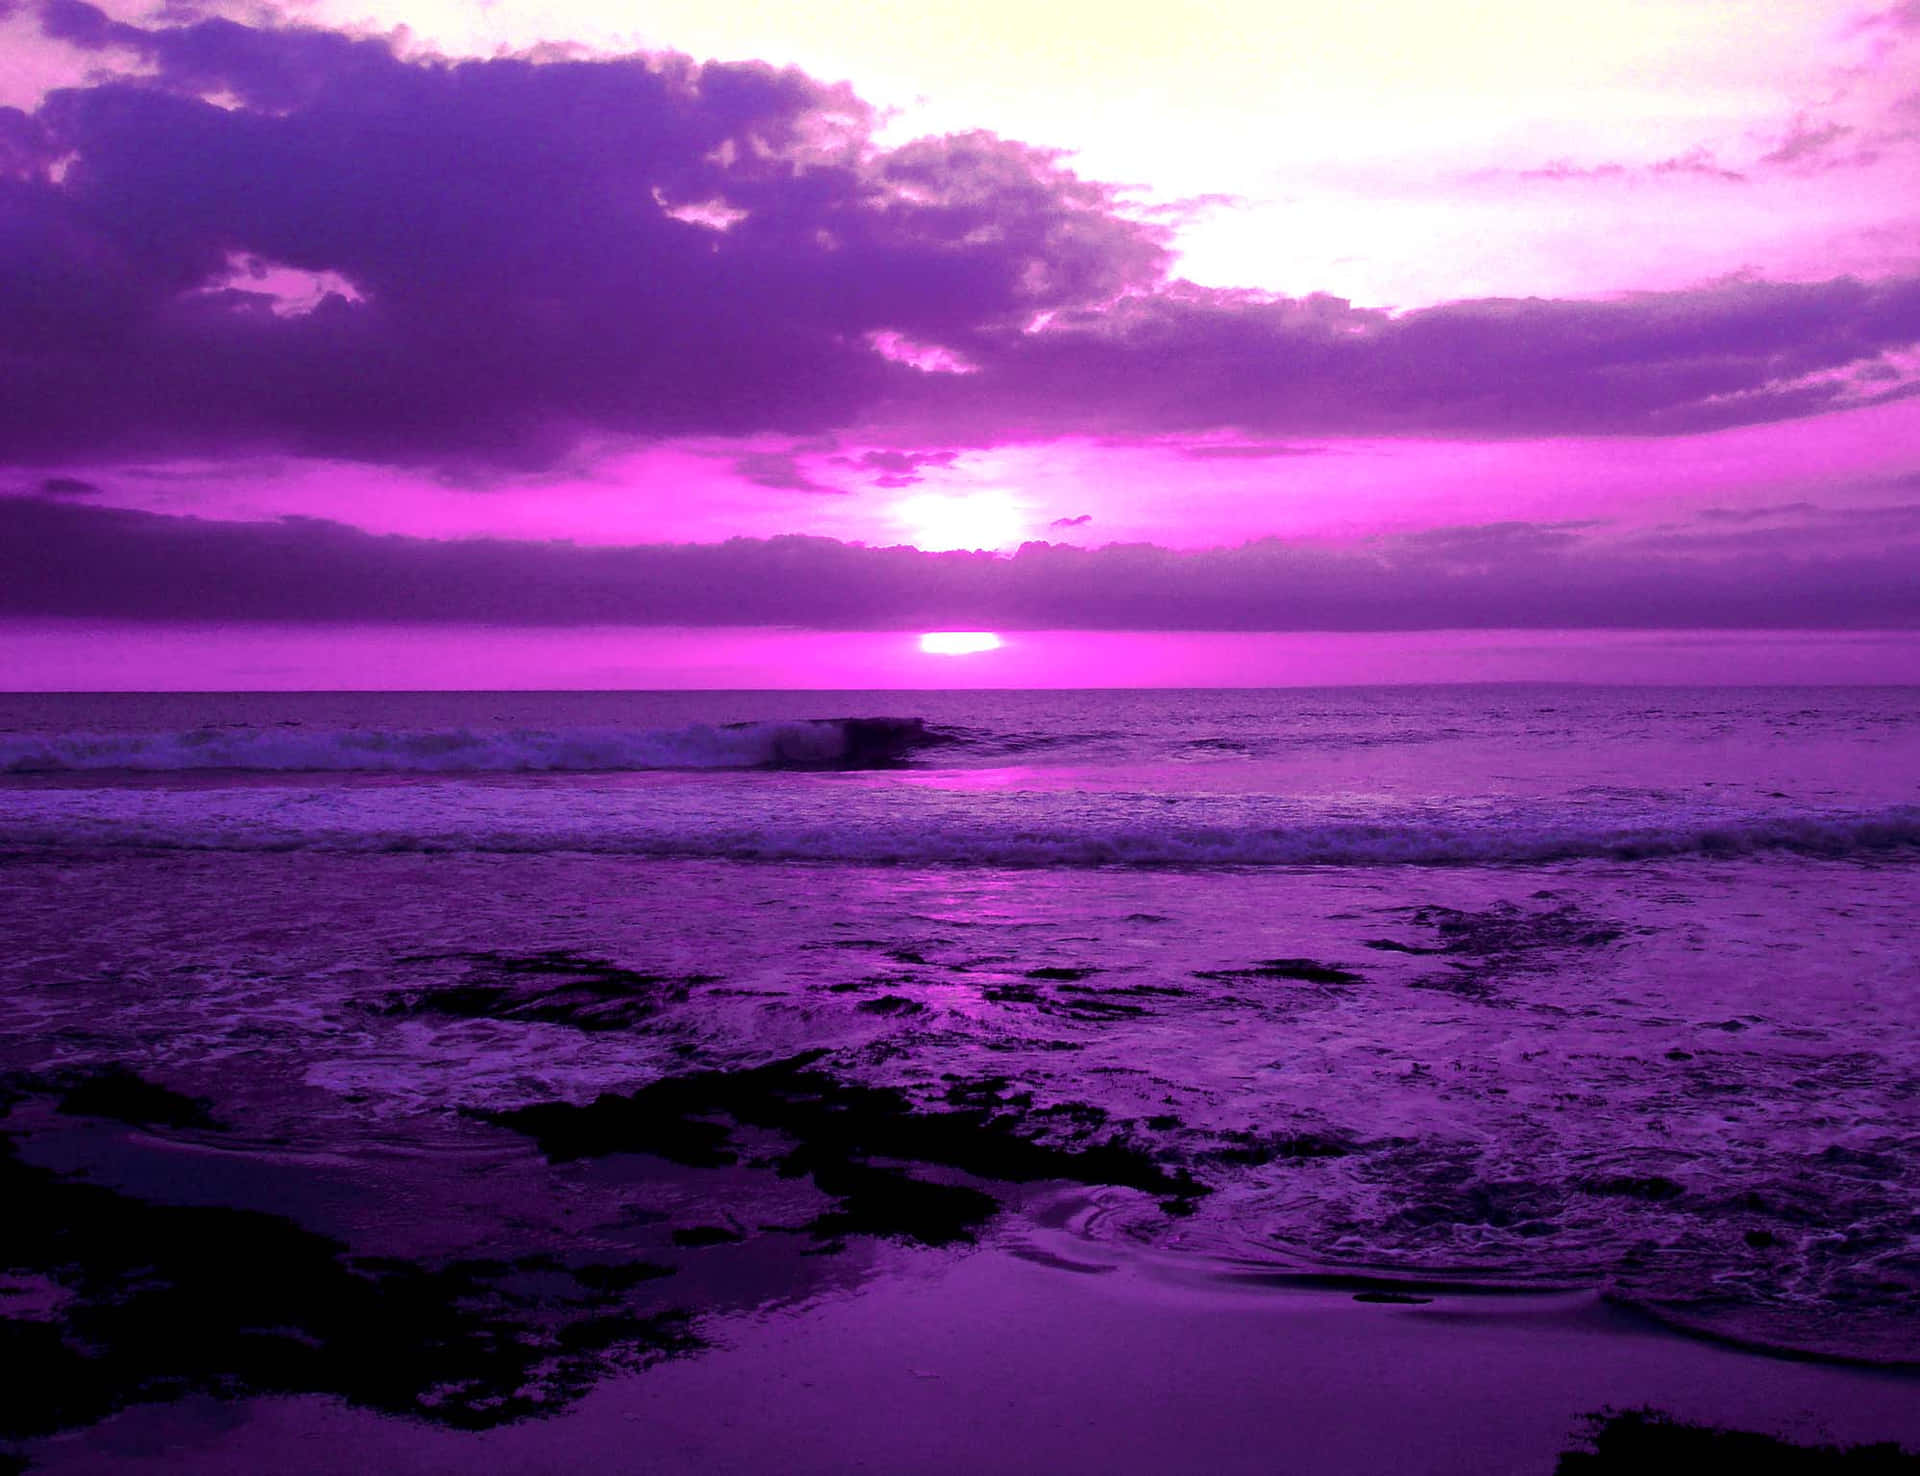 A beautiful display of purple hues